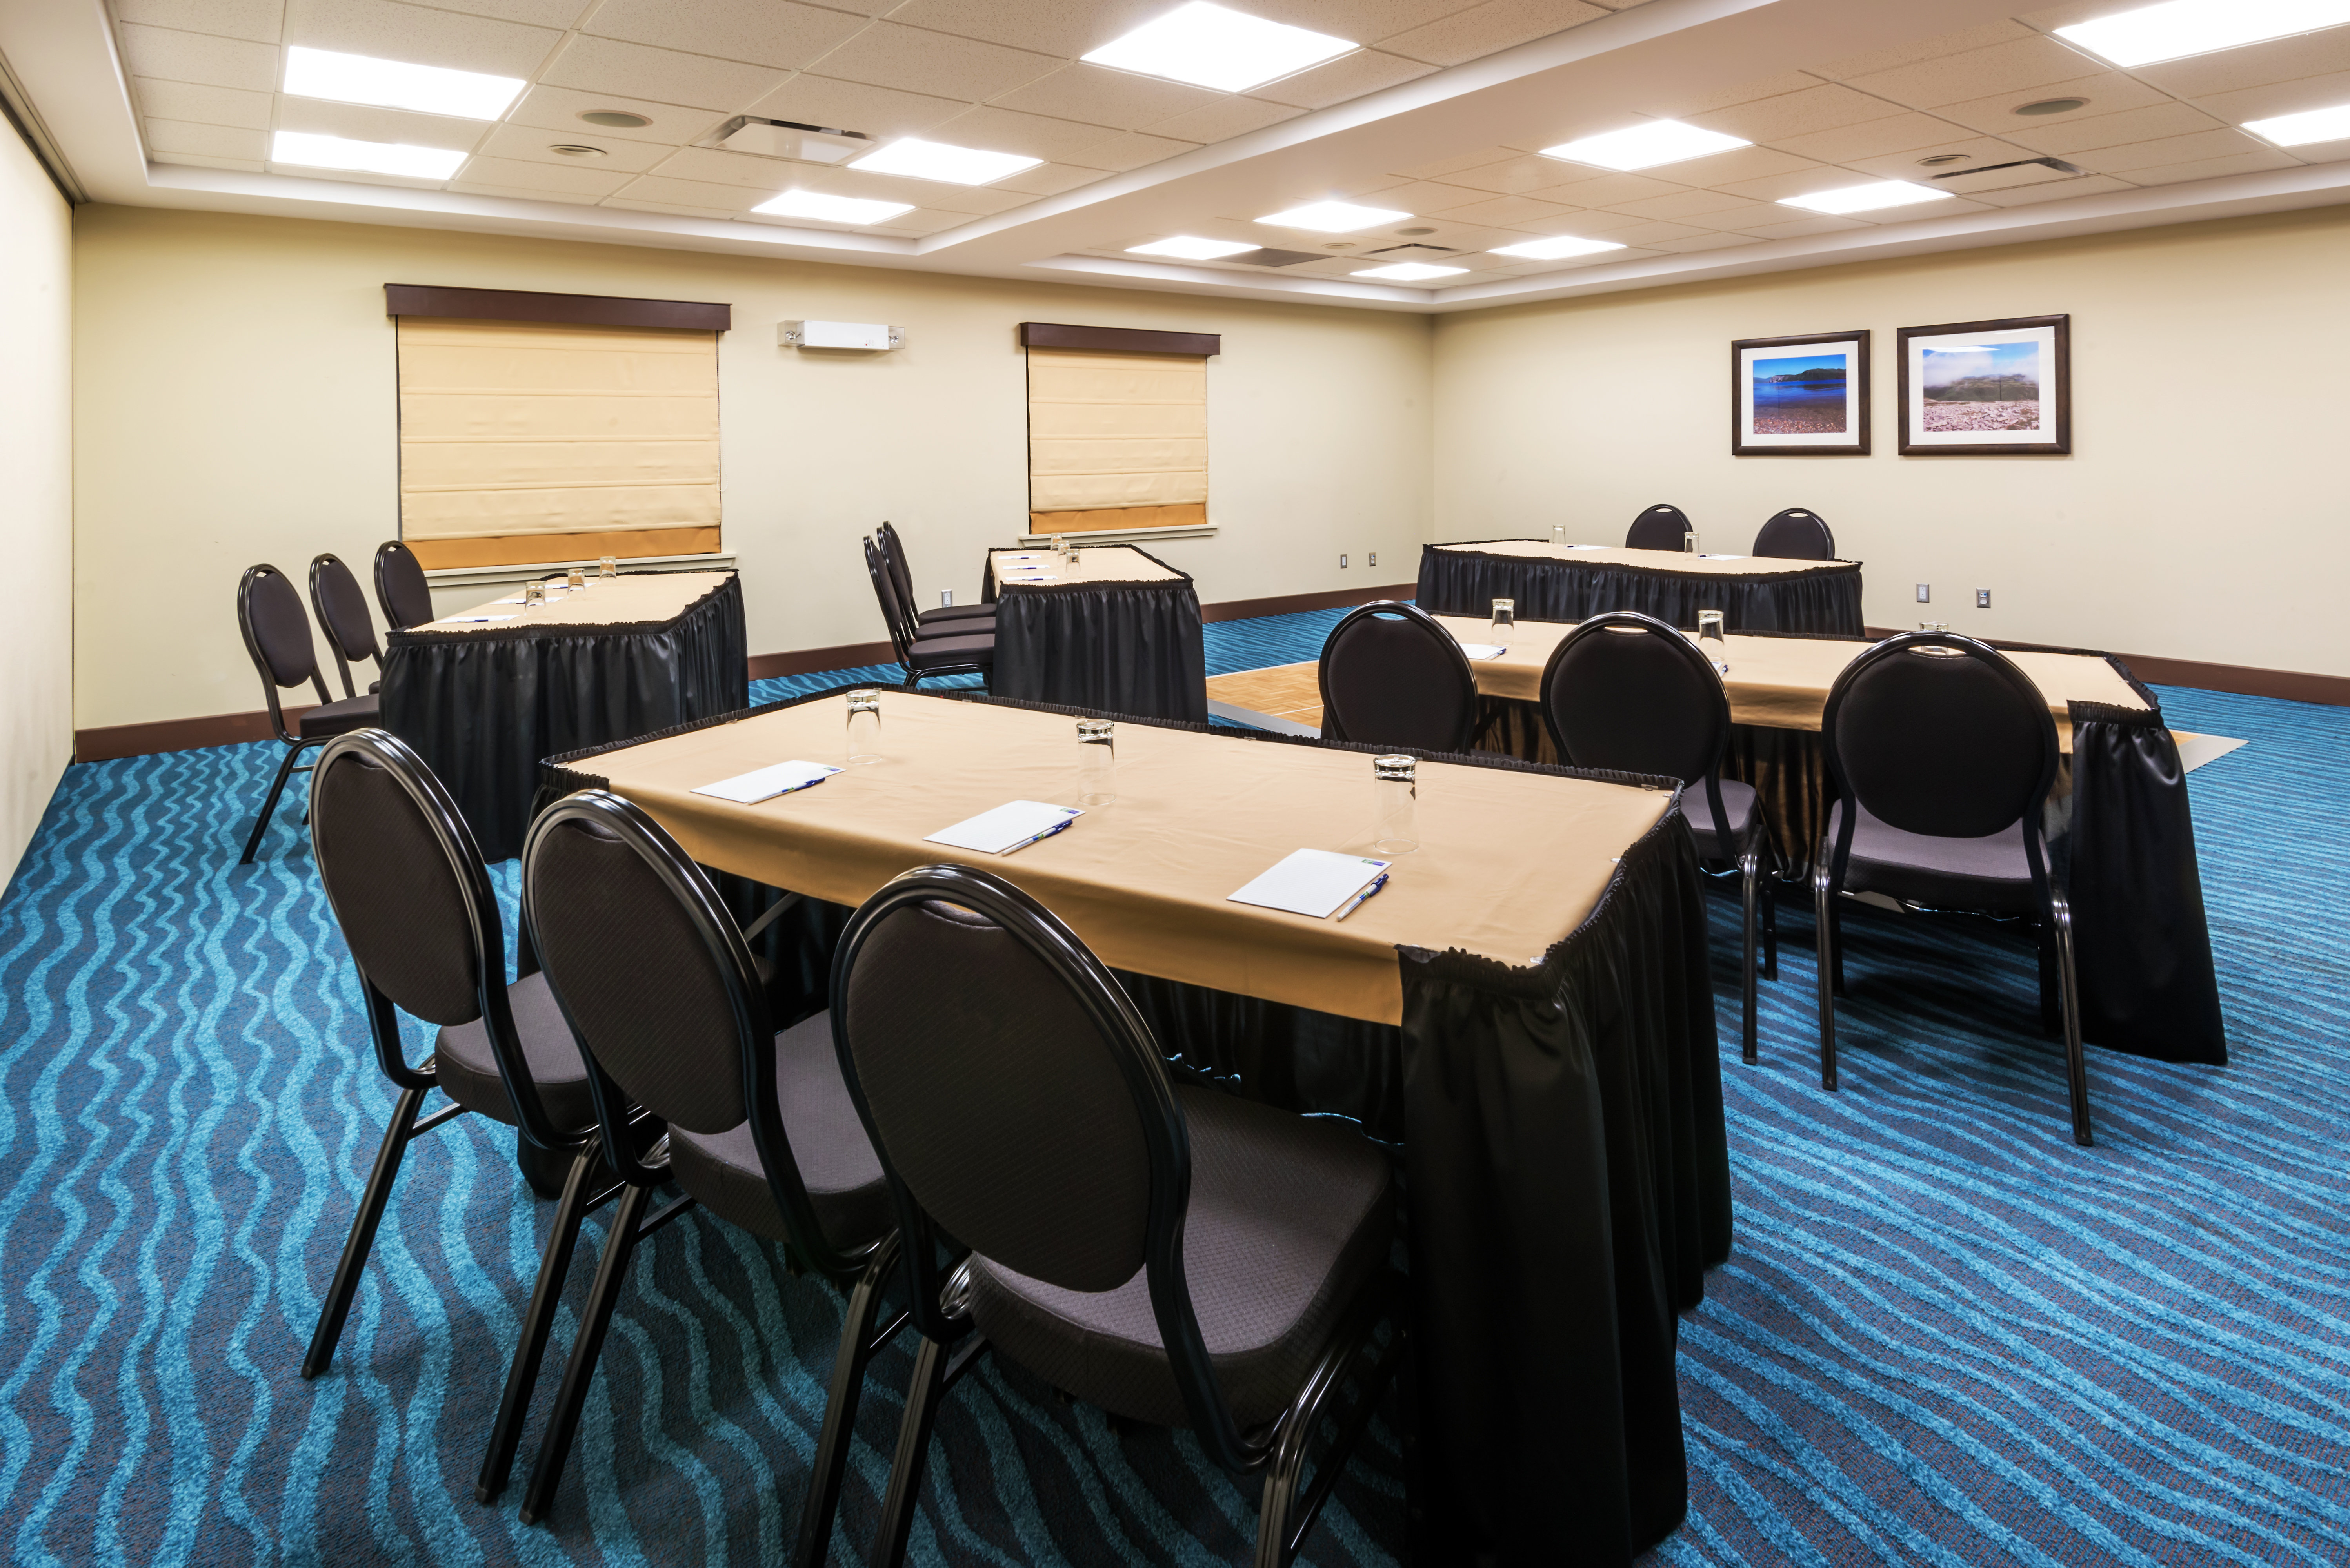 All Meeting Rooms Offer Free WiFi and AV Equipment